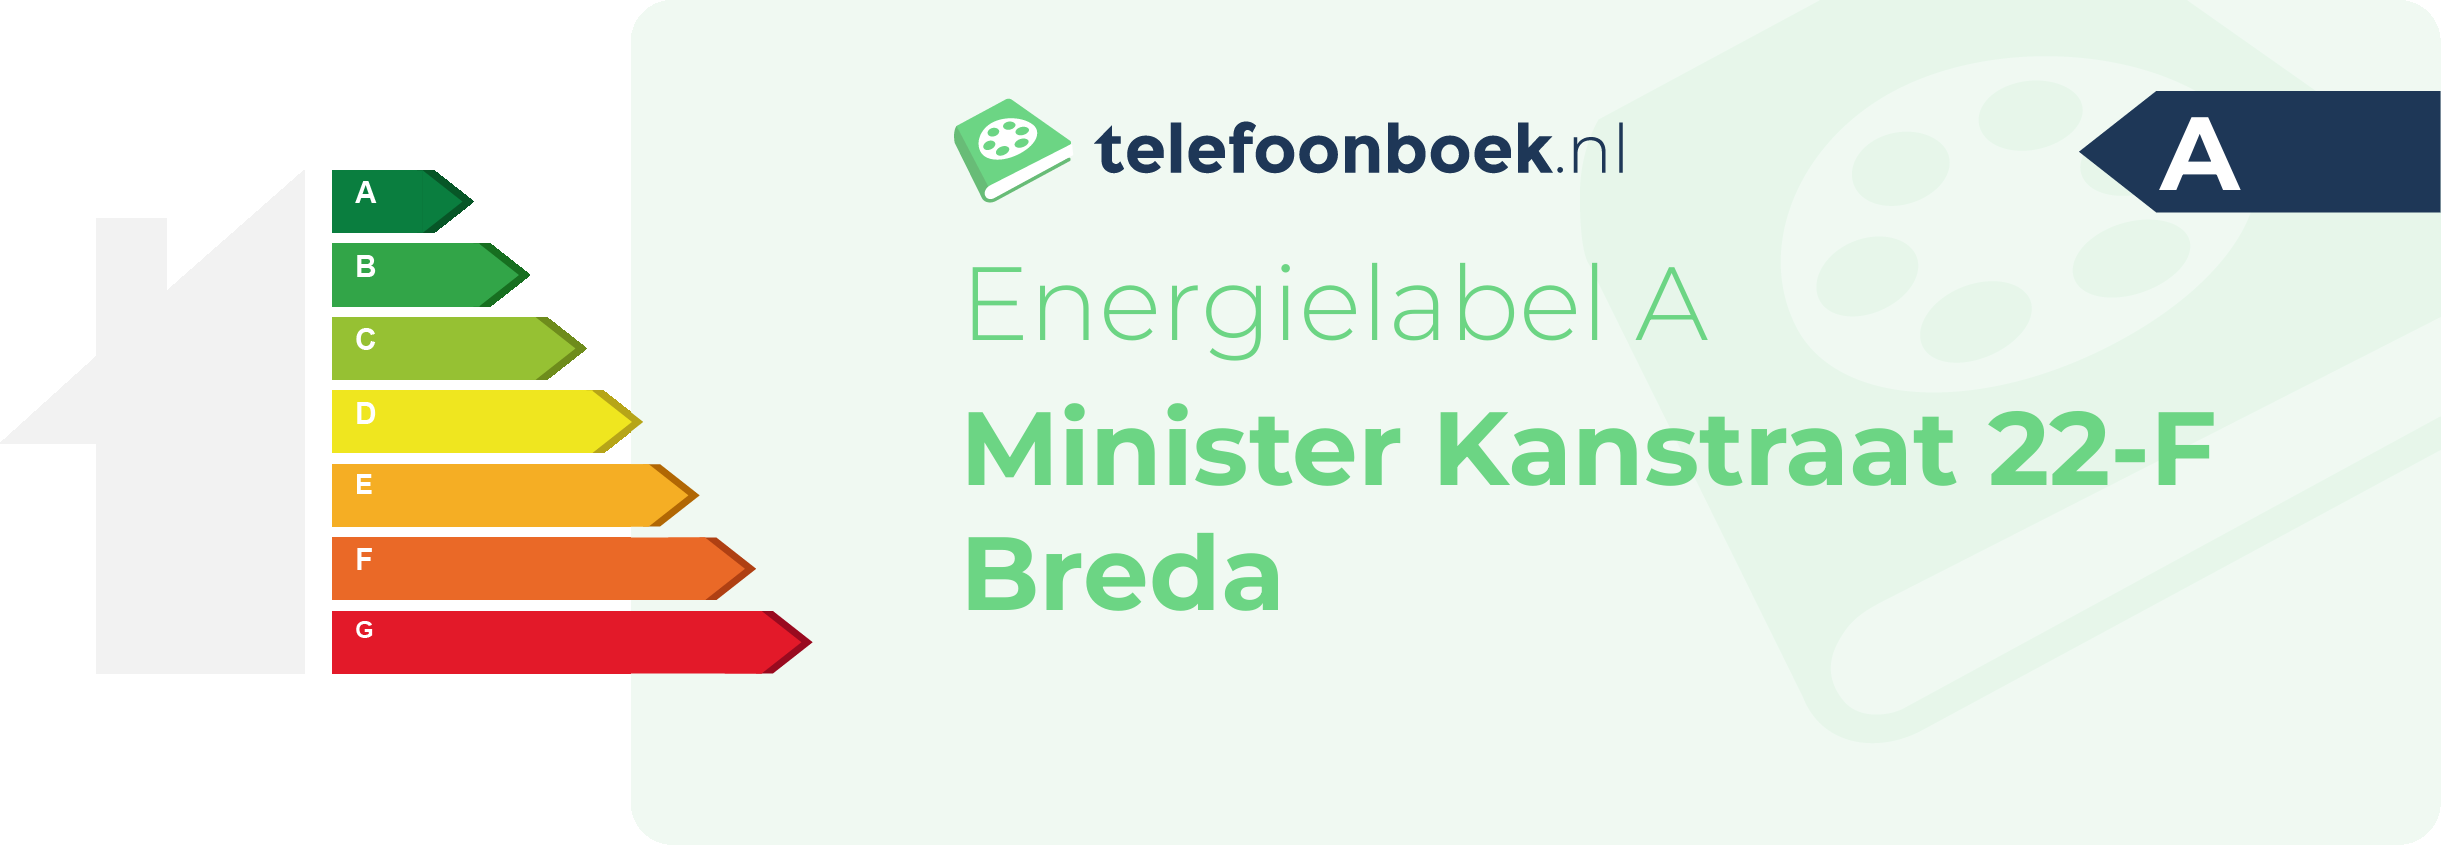 Energielabel Minister Kanstraat 22-F Breda